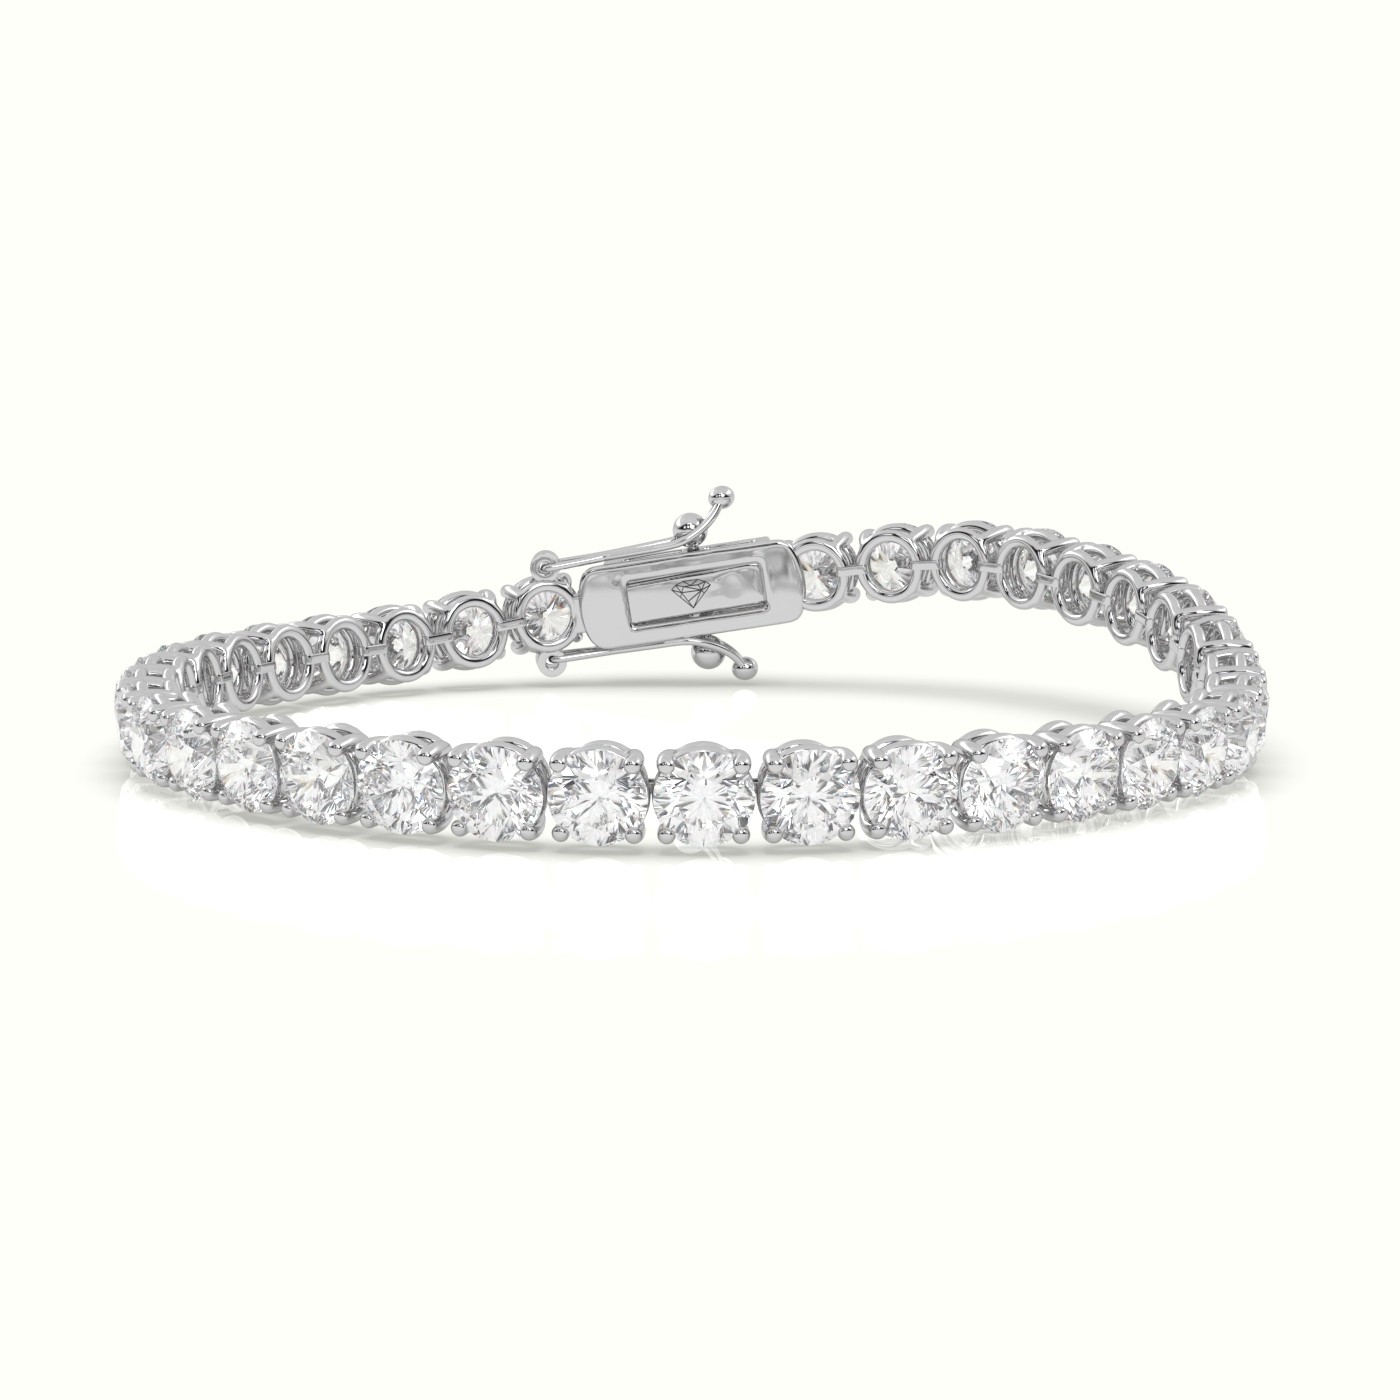 18k white gold  tennis bracelet 12.95 carat diamonds